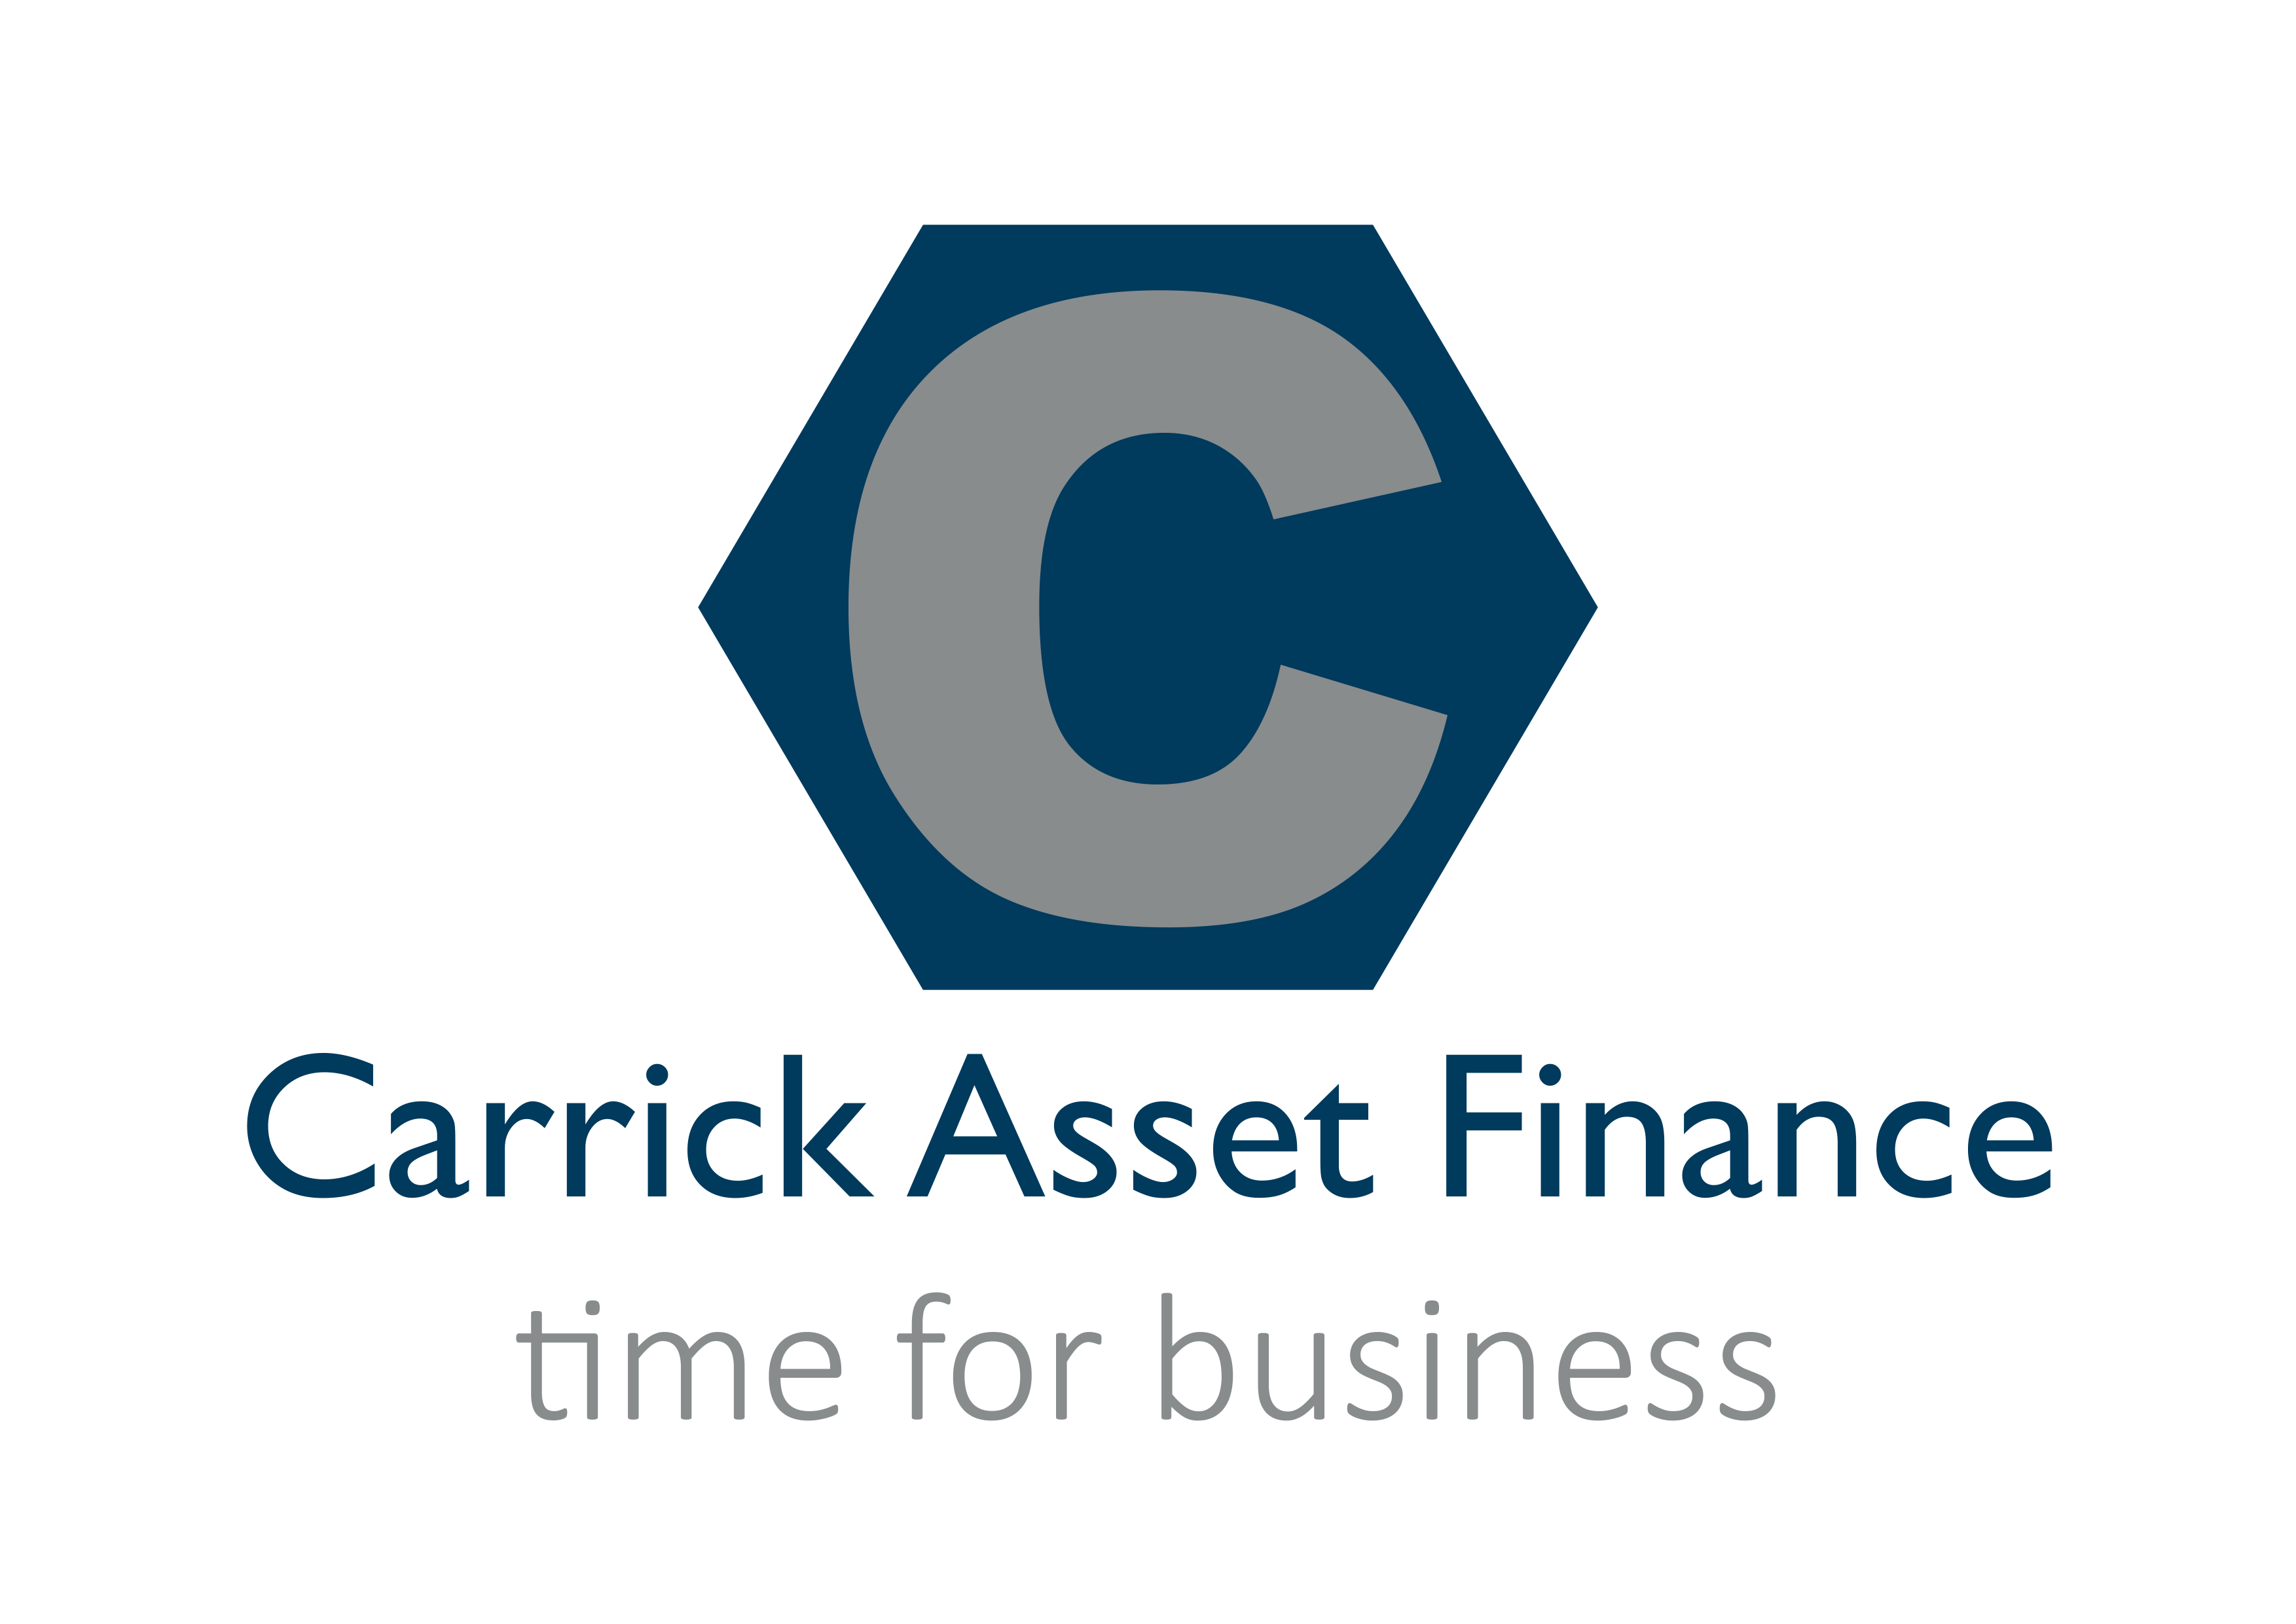 UK leasing company Carrick Asset Finance launches